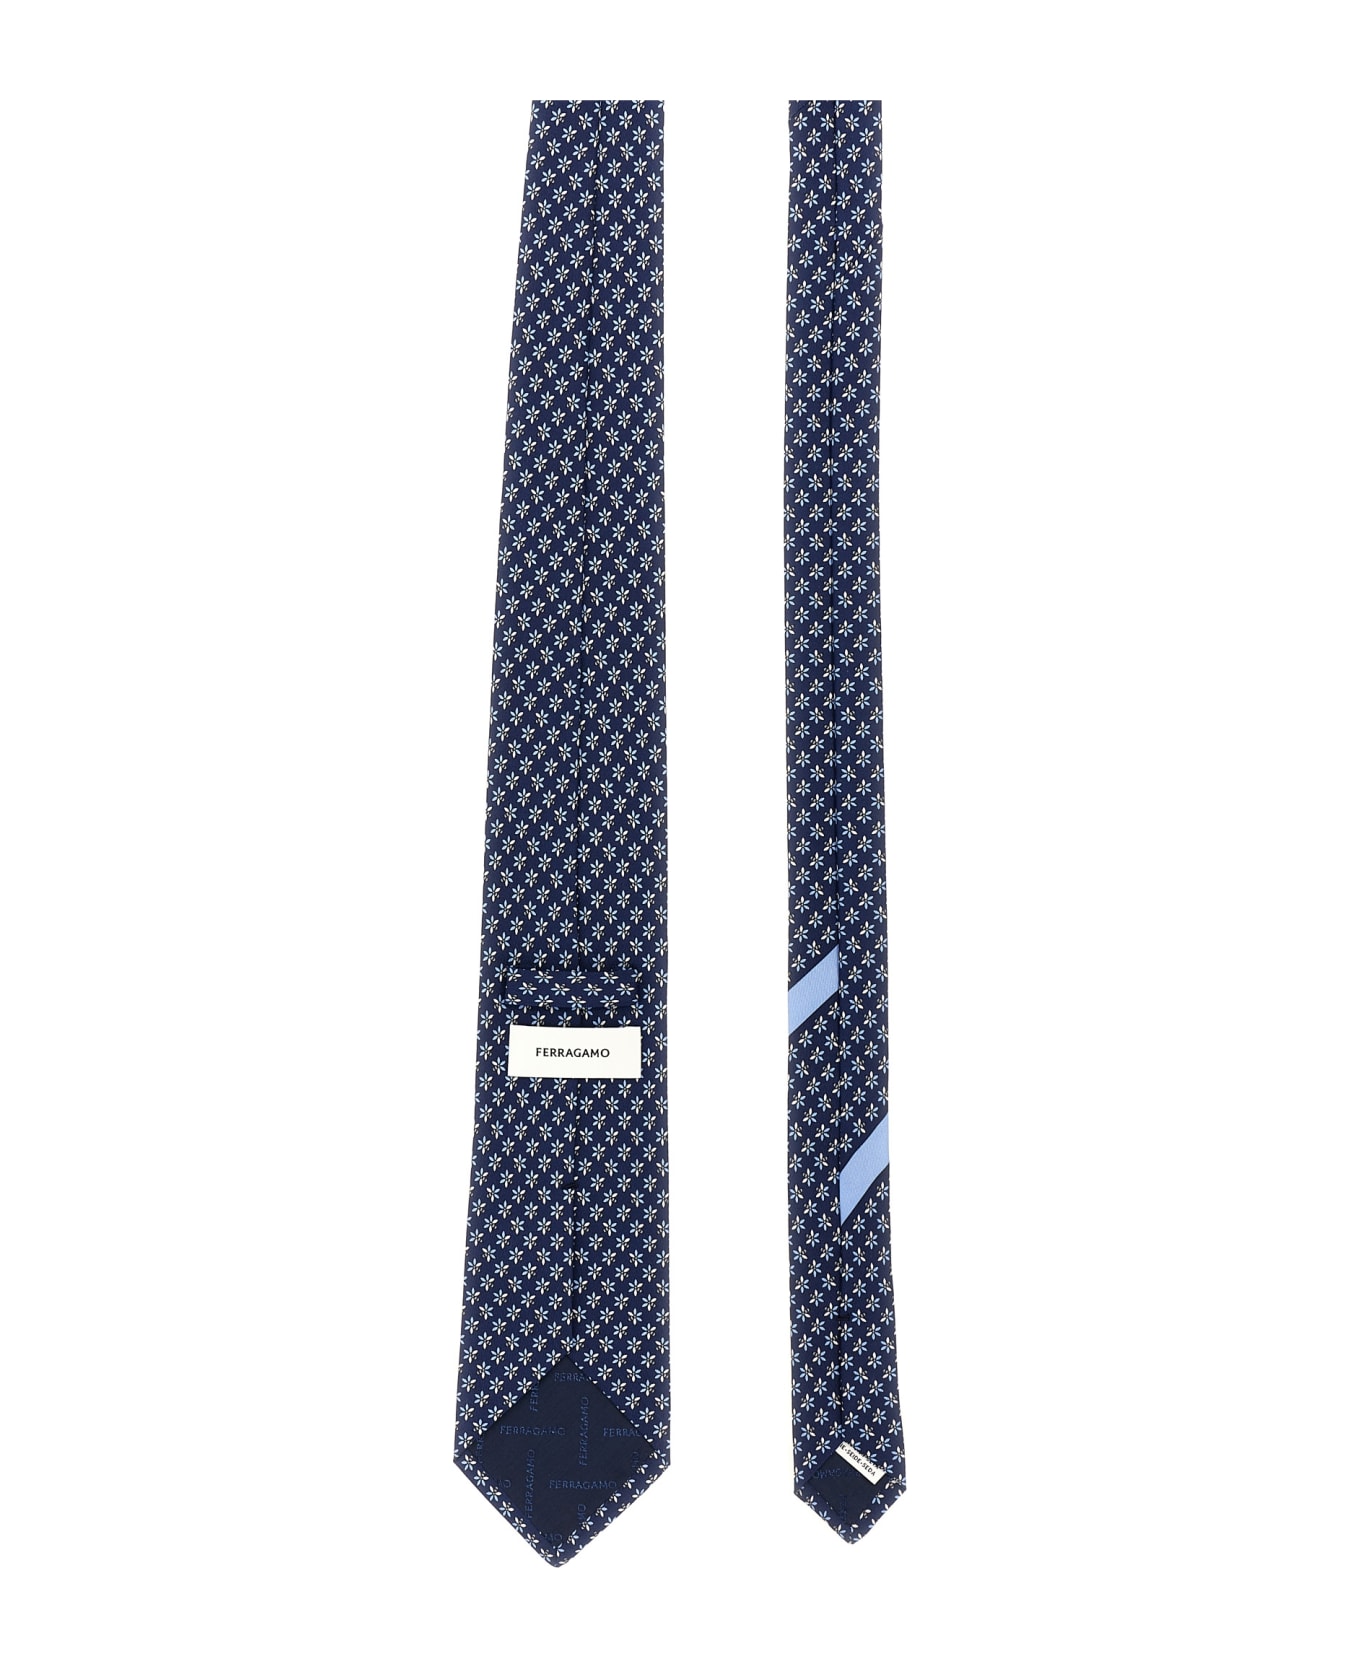 Ferragamo Printed Tie - Blue ネクタイ